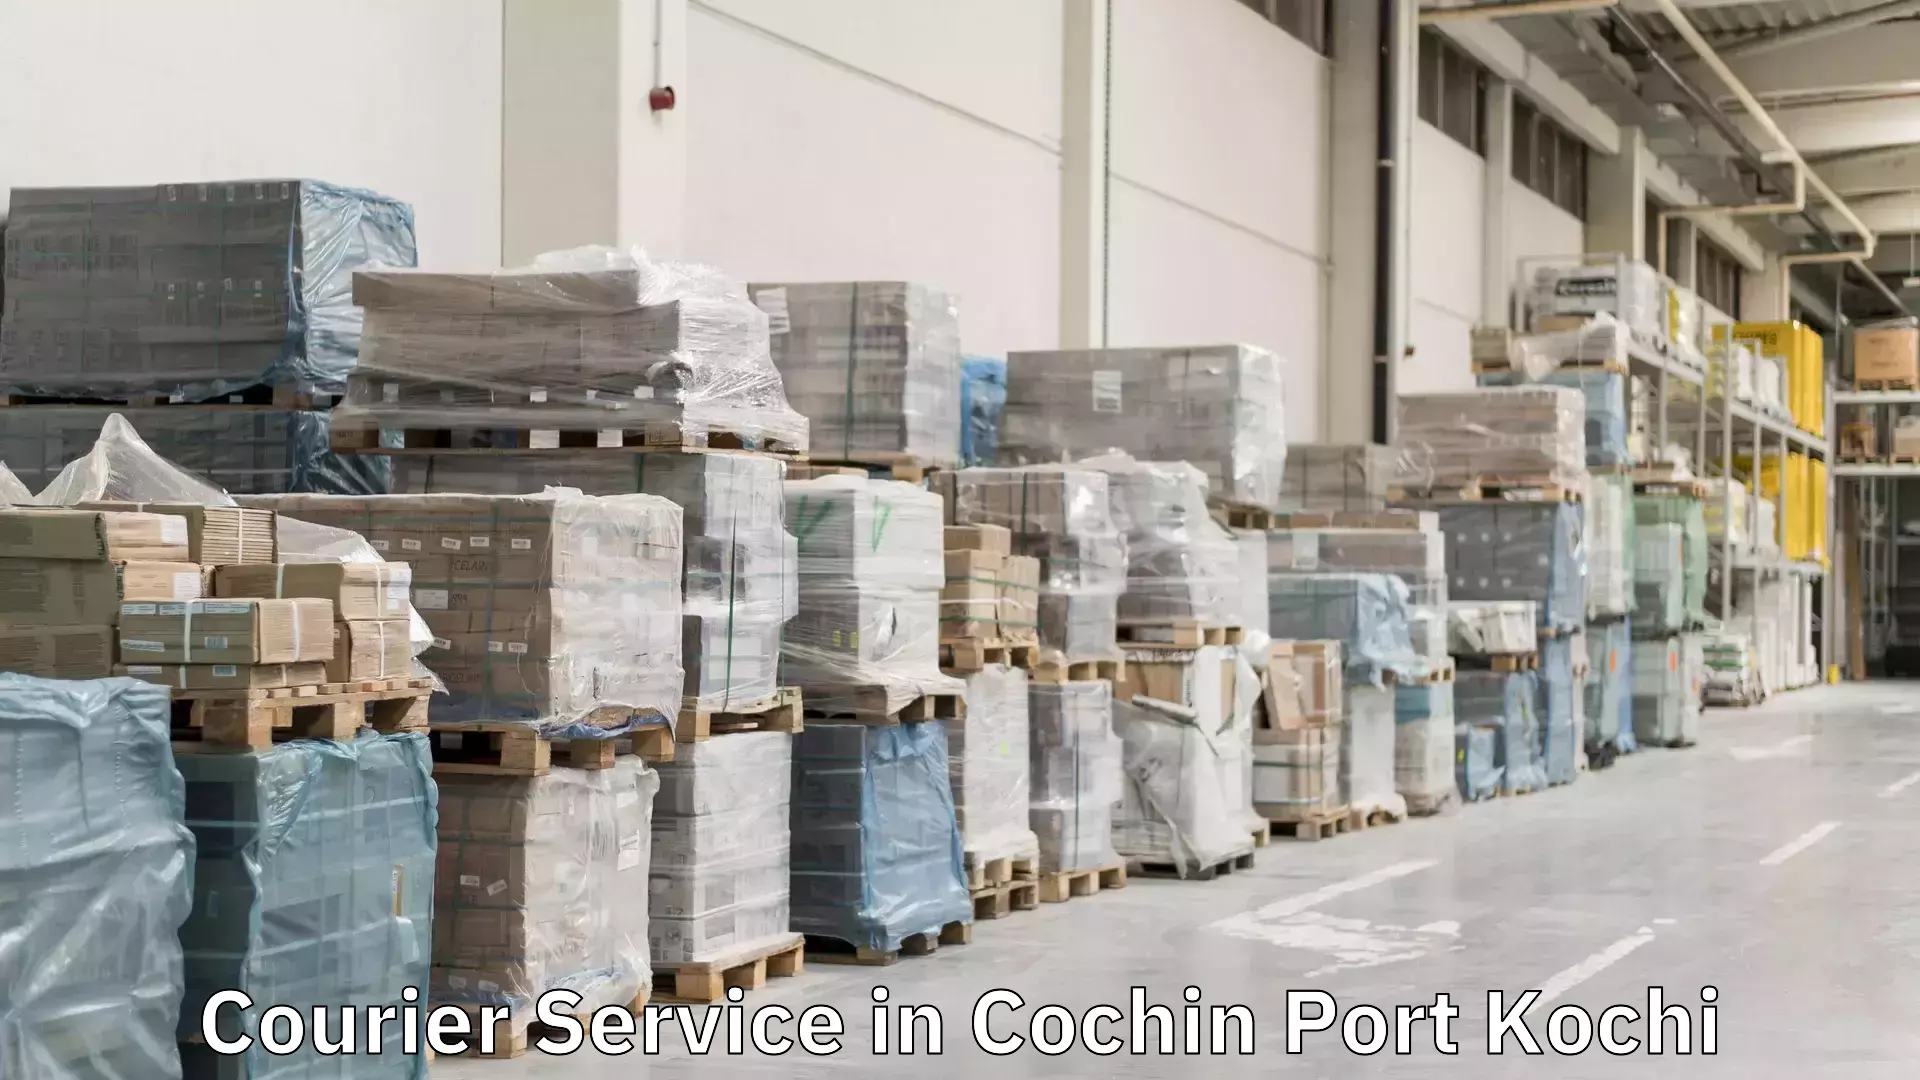 Comprehensive logistics in Cochin Port Kochi